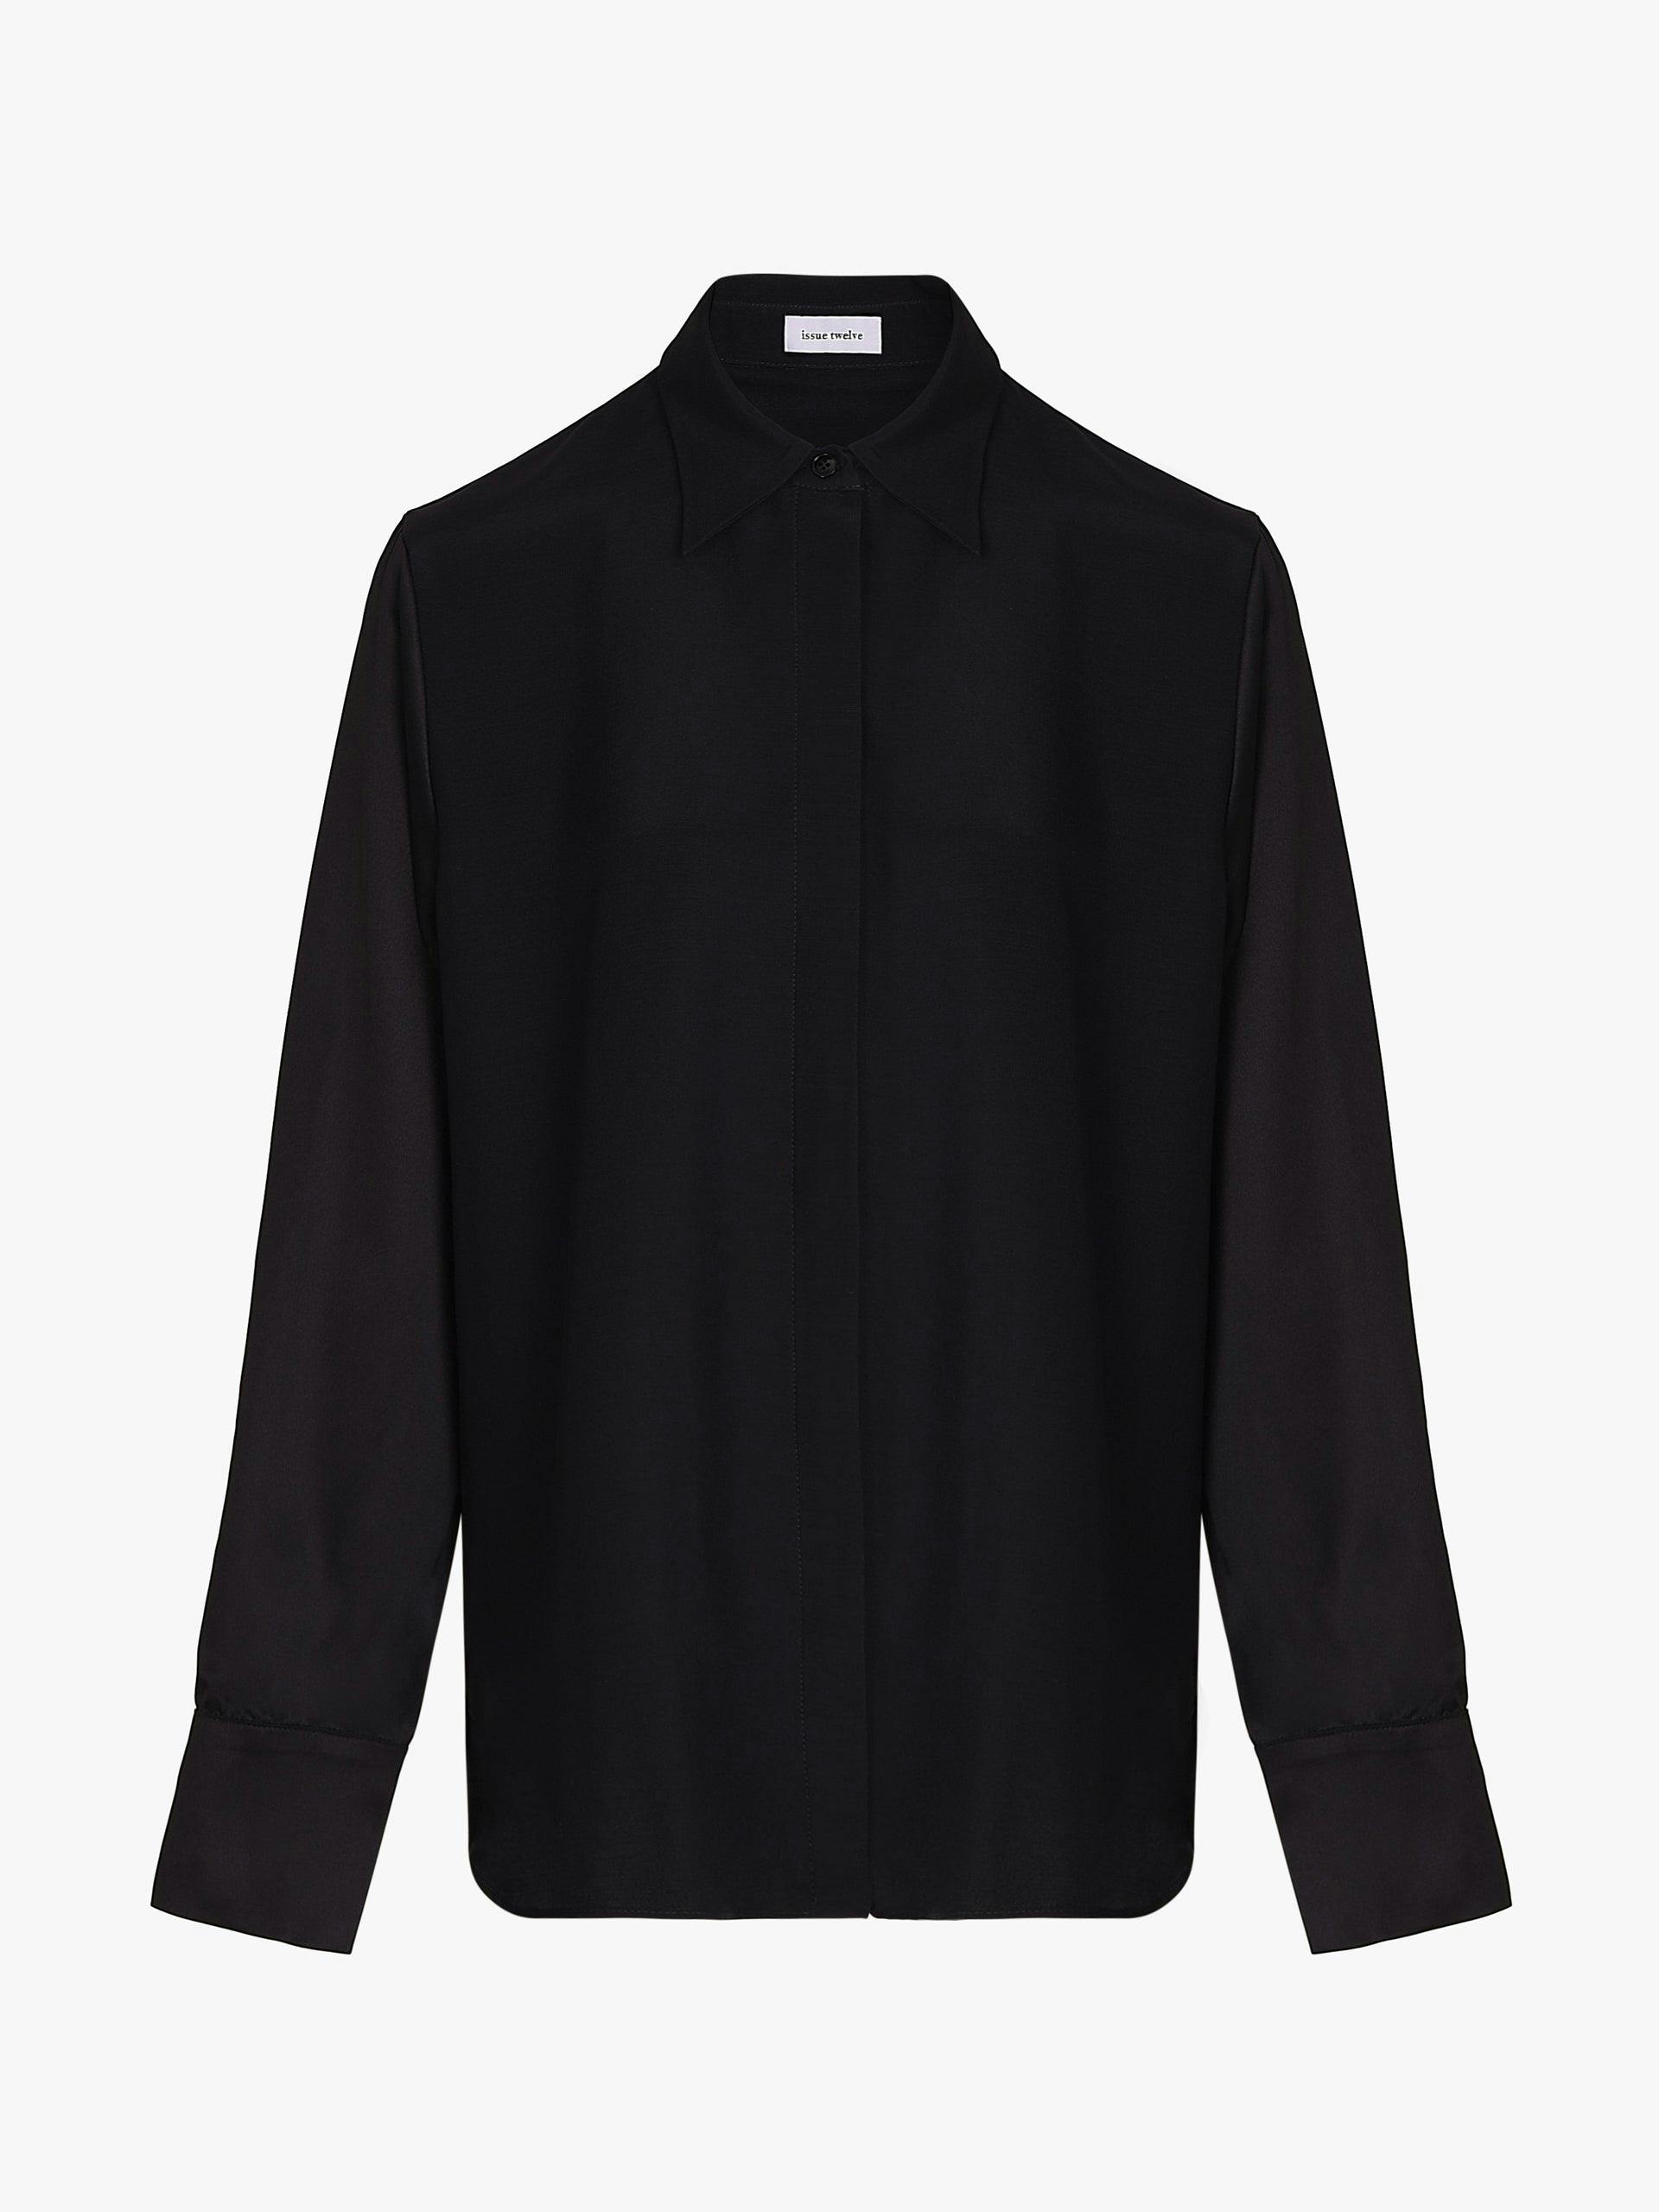 Black tailored wool silk shirt